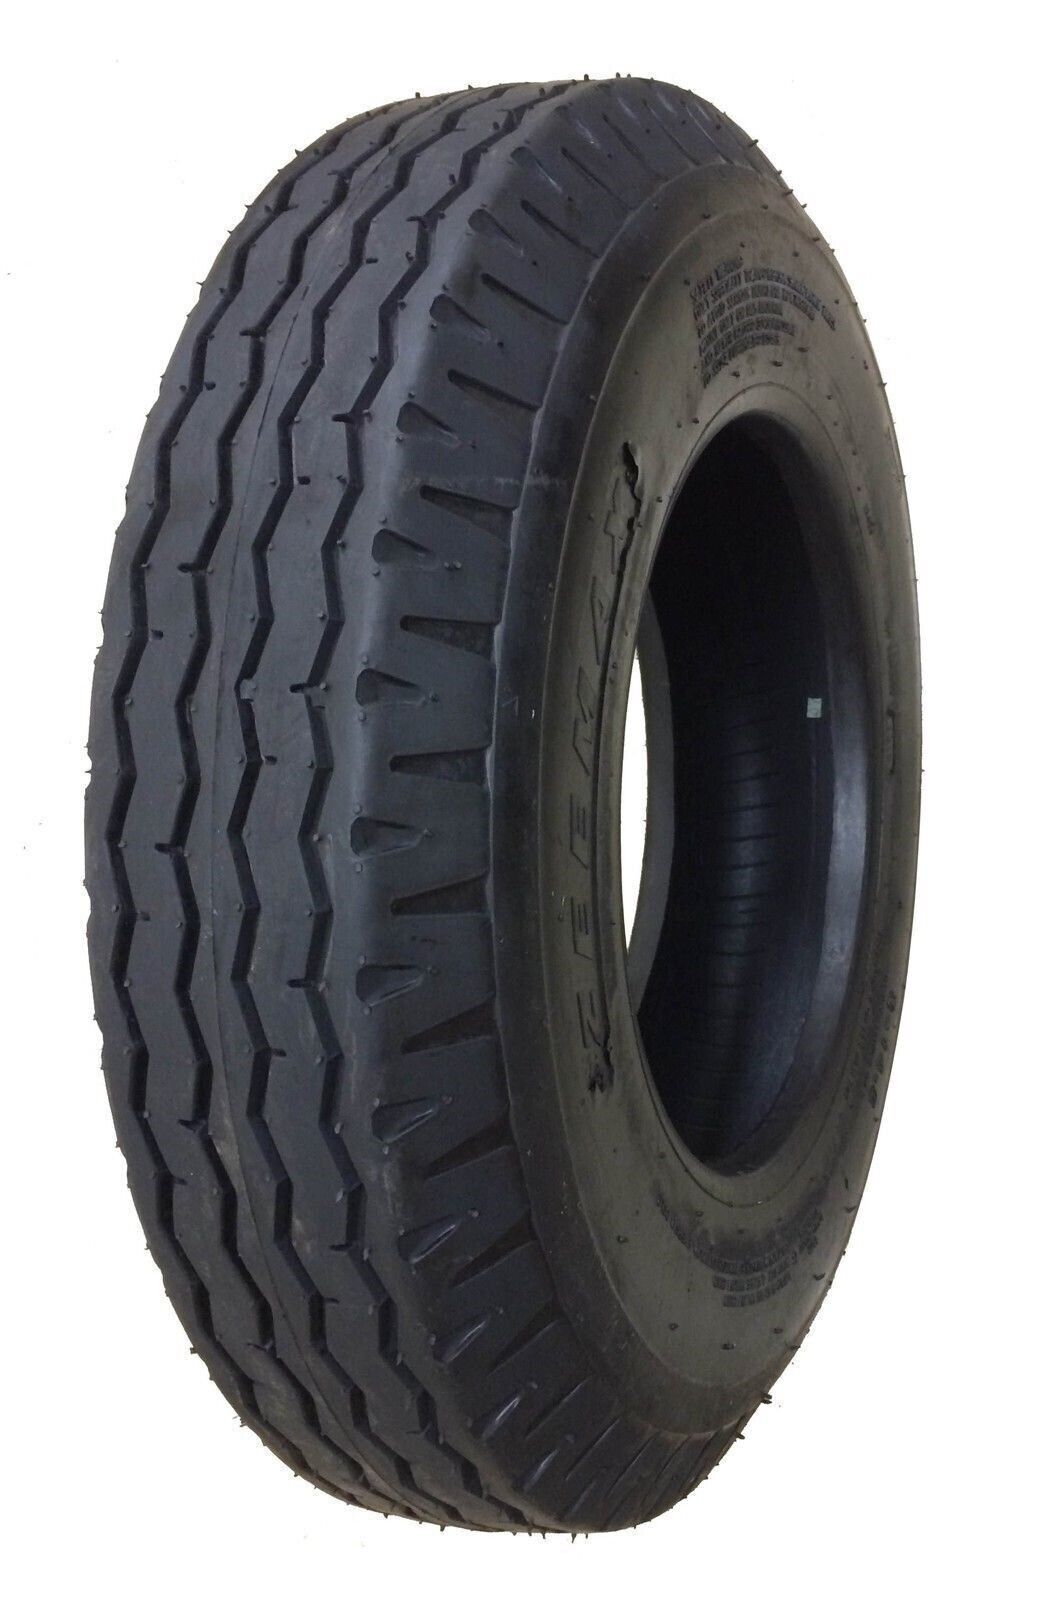 New 8-14.5 8x14.5 Trailer Tire Heavy Duty Highway ST 14PR LR G - 11067 [Single]